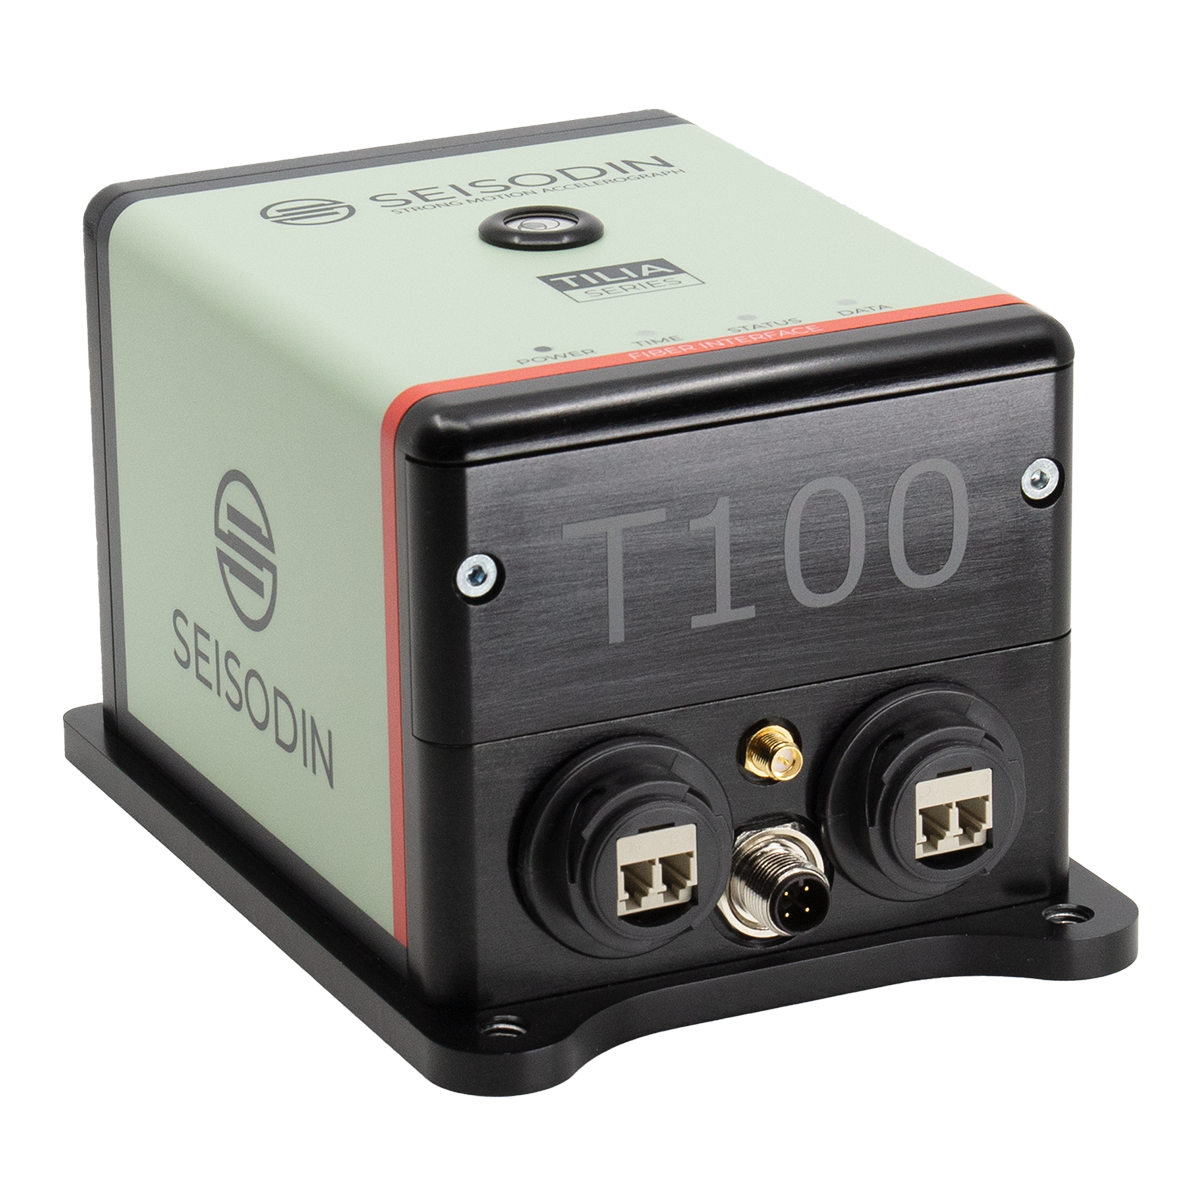 Seisodin Tilia T100F Seismic MEMS Accelerograph with Fiber Optical Ethernet